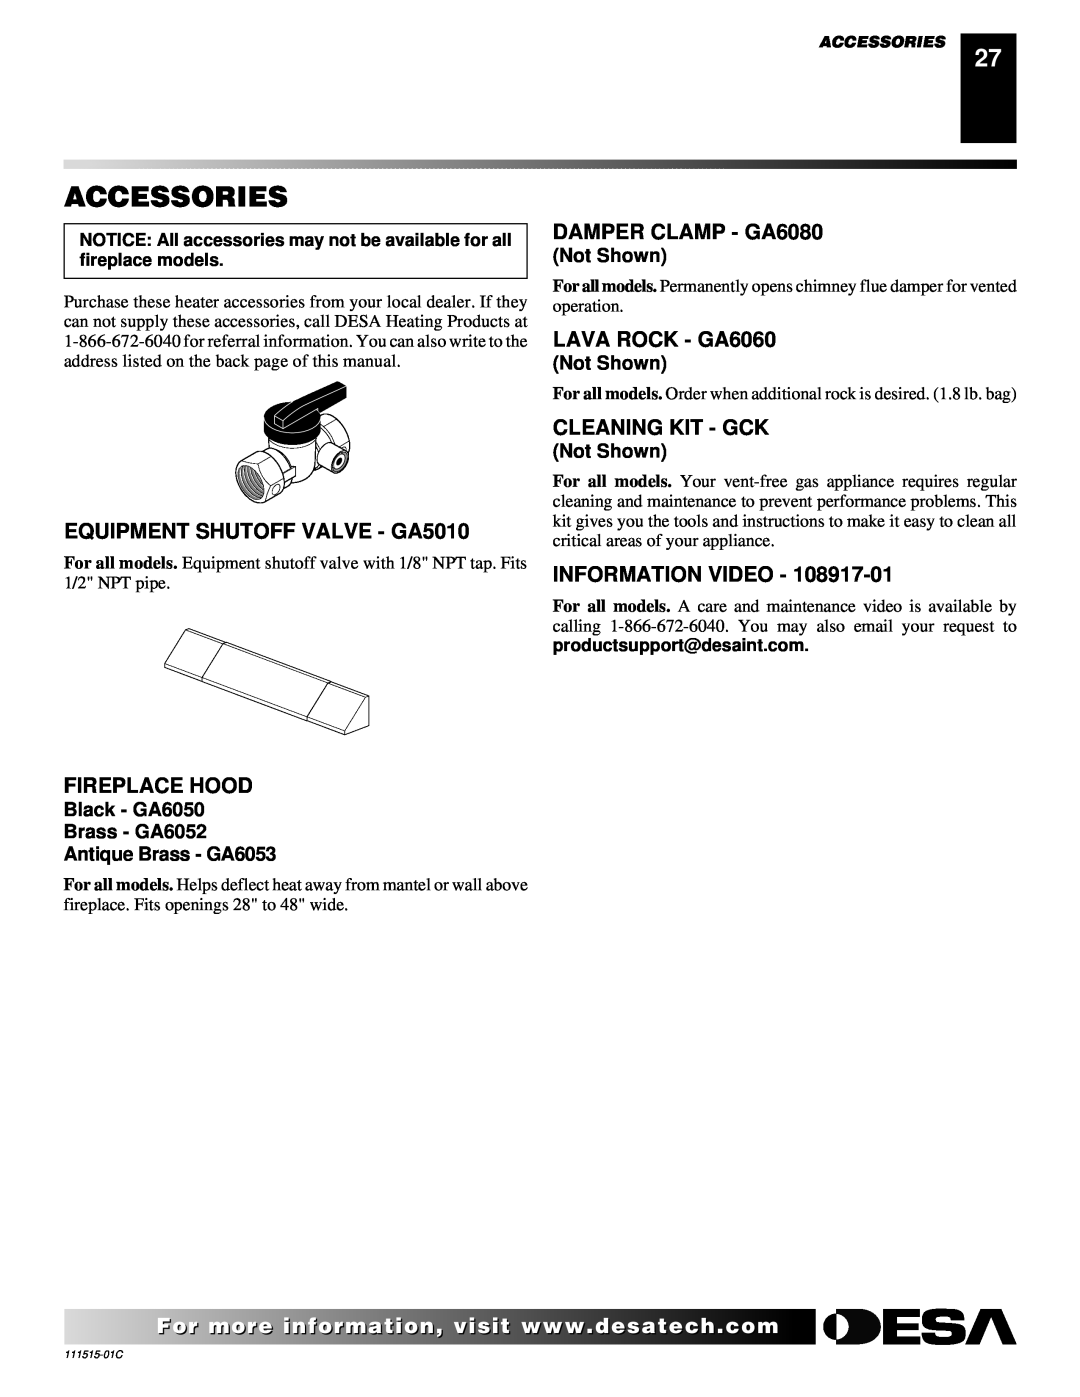 Desa LDL3930PR Accessories, EQUIPMENT SHUTOFF VALVE - GA5010, Fireplace Hood, DAMPER CLAMP - GA6080, LAVA ROCK - GA6060 